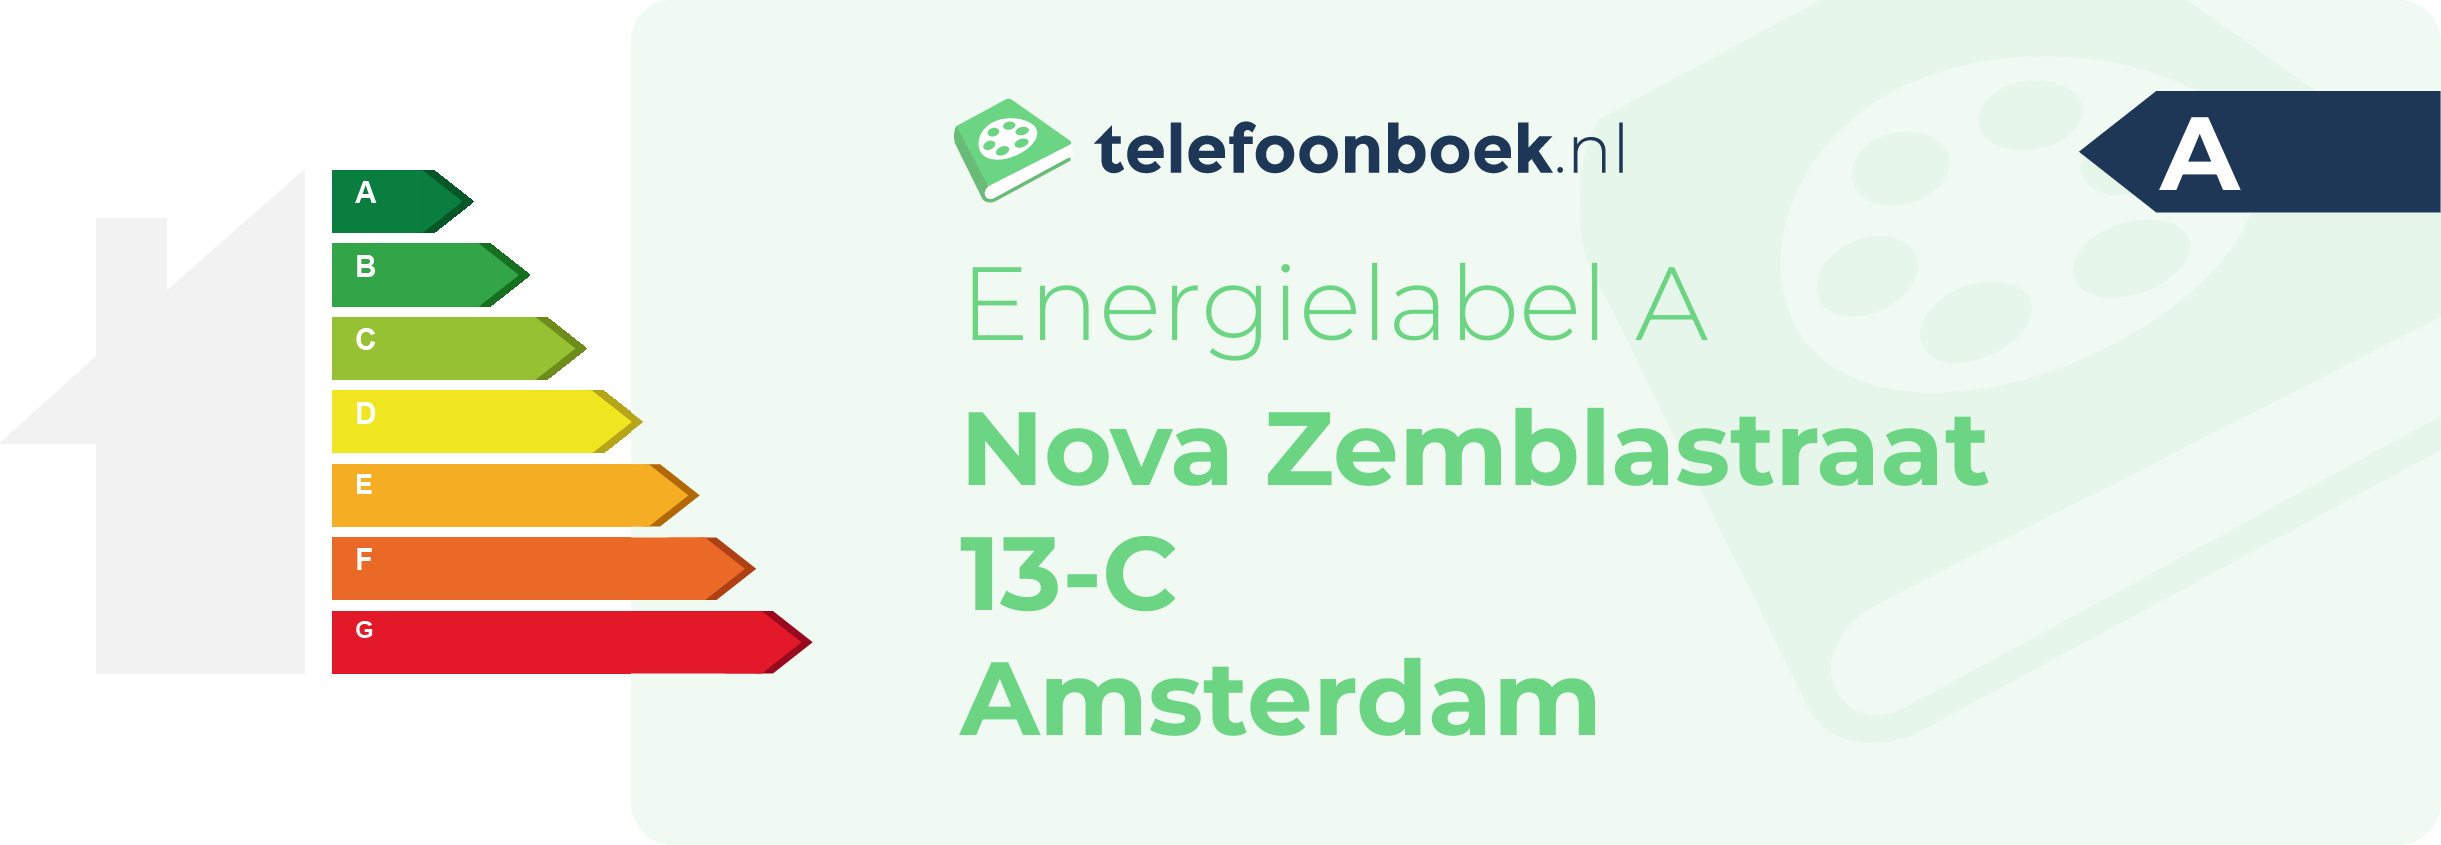 Energielabel Nova Zemblastraat 13-C Amsterdam